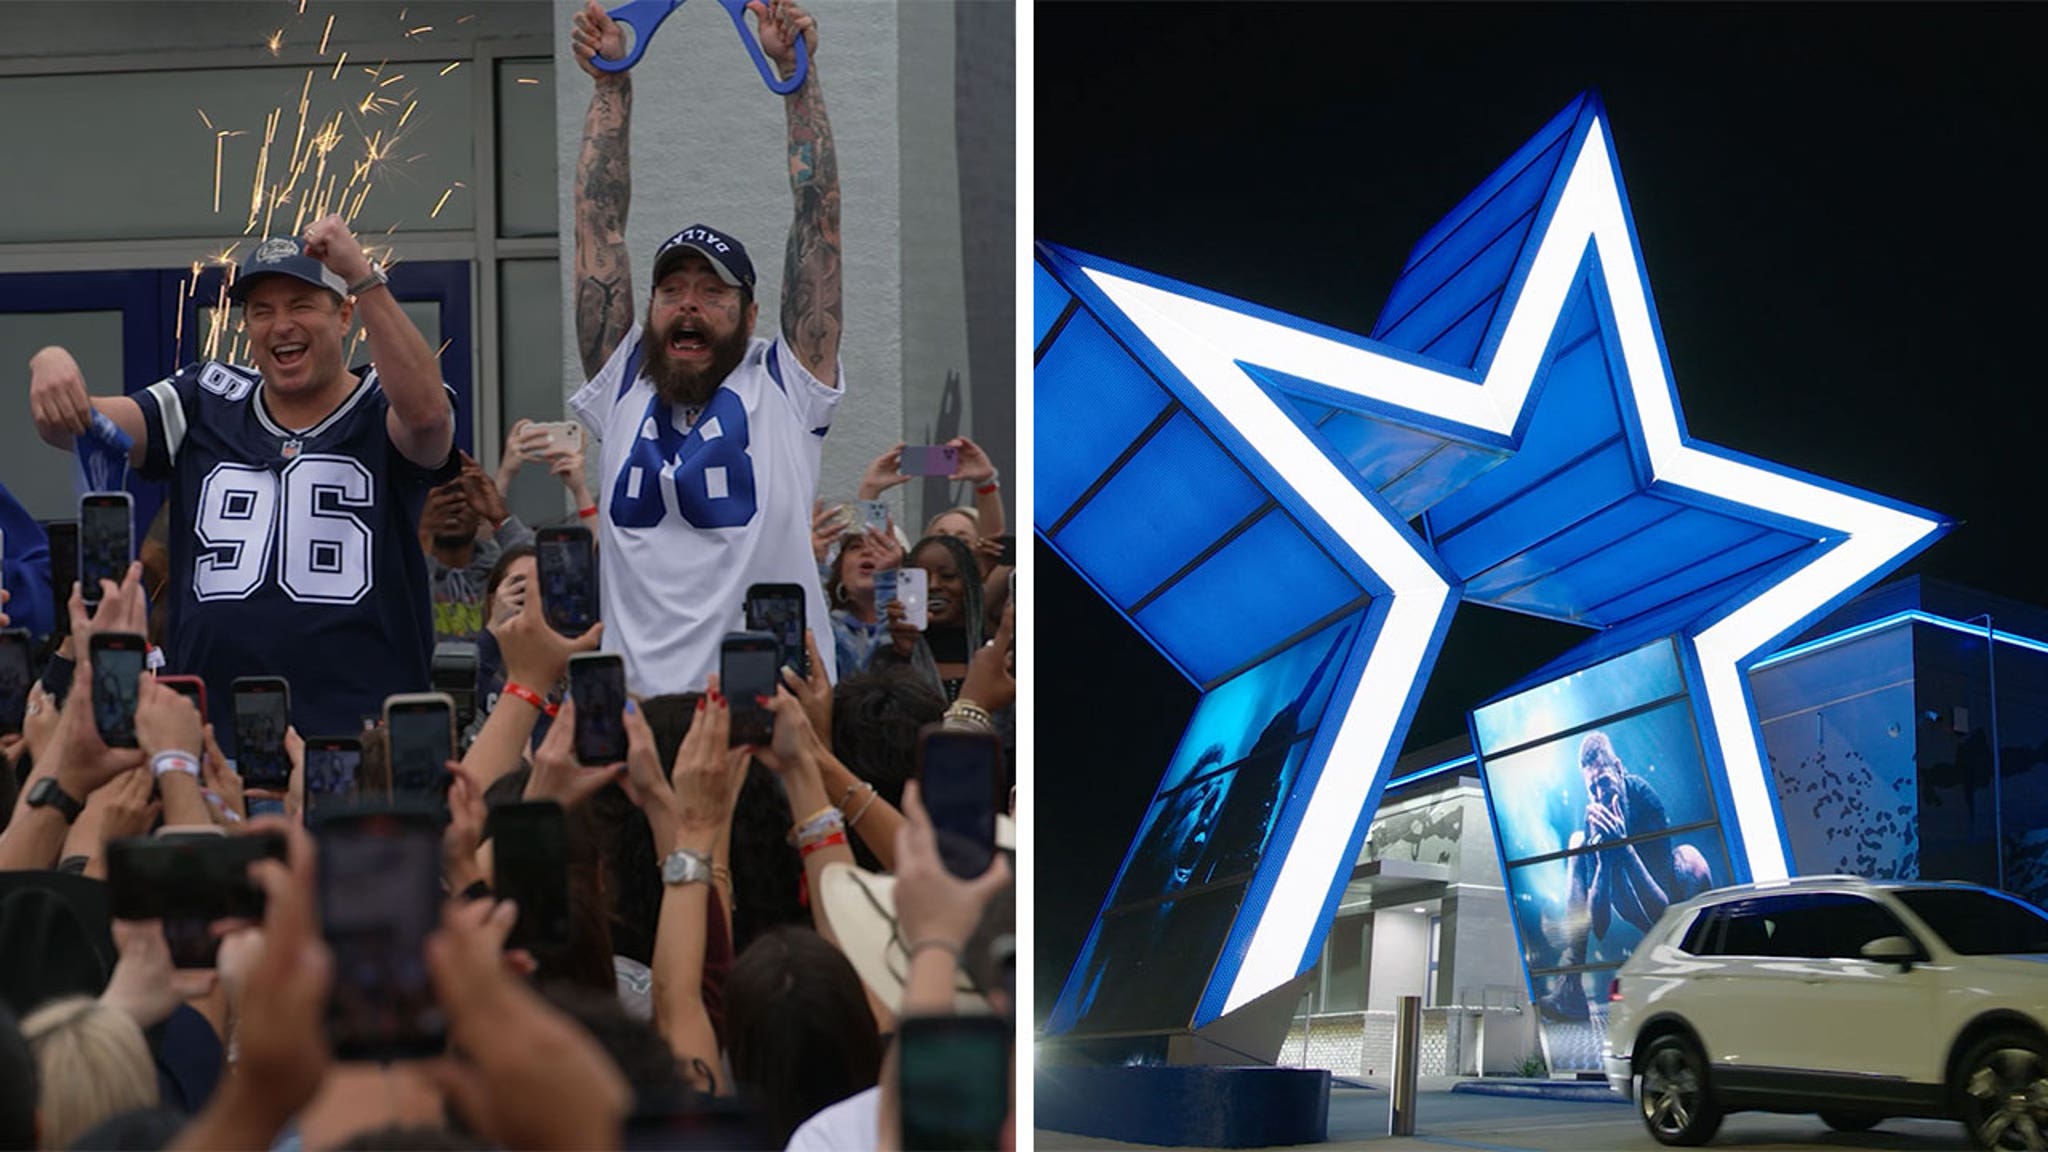 Post Malone Surprises Fans at Raising Cane's Dallas Cowboys Location